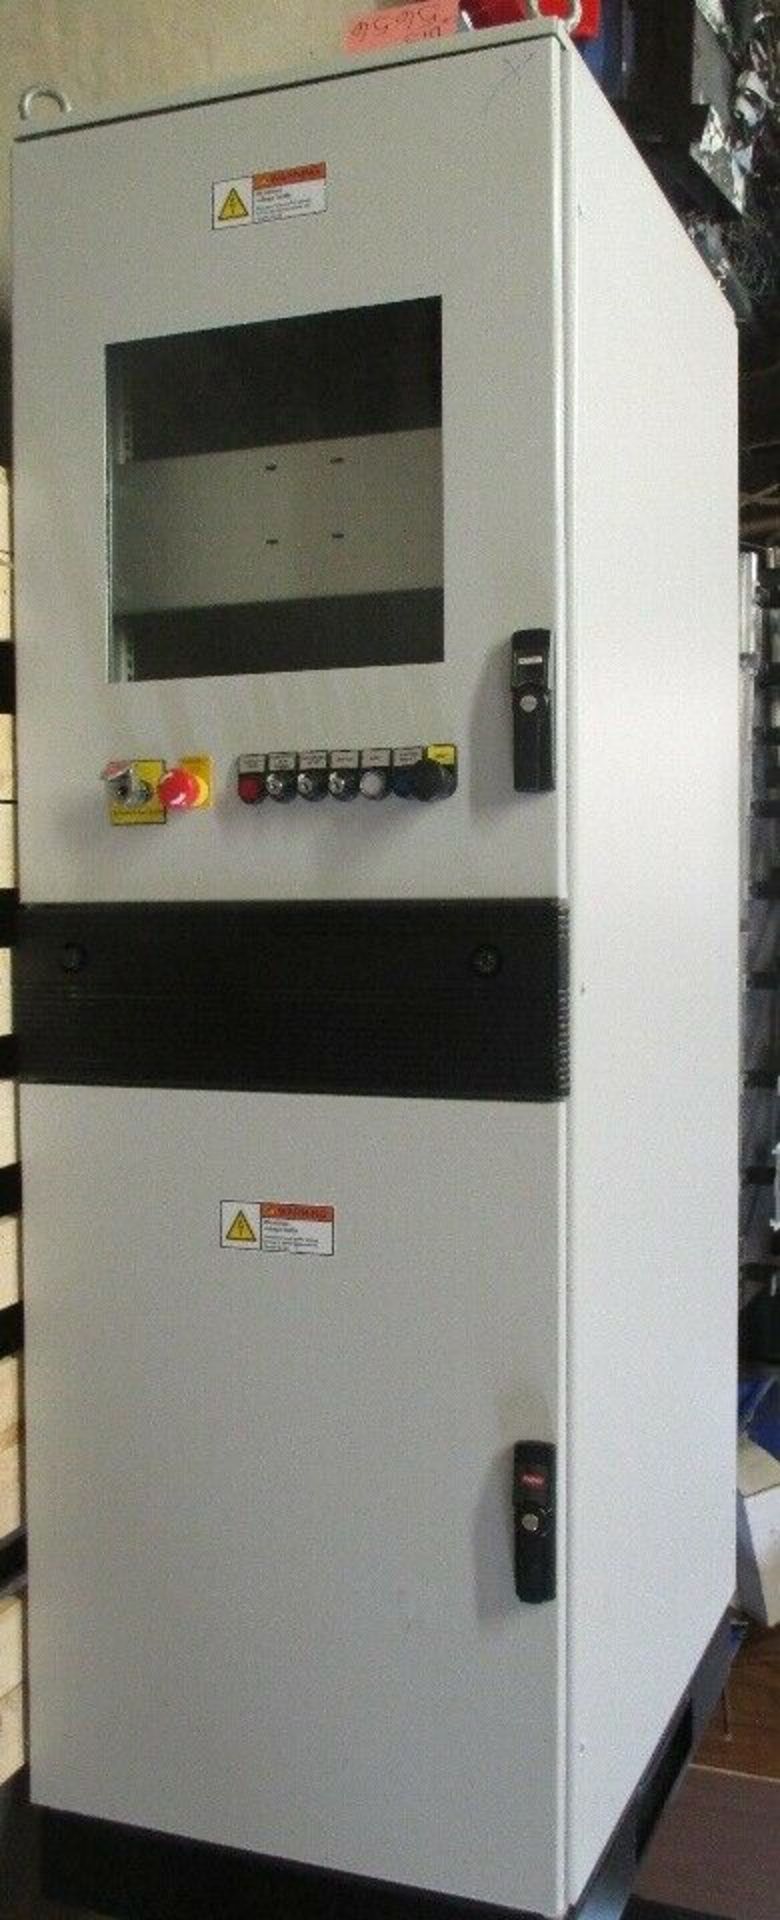 Hoffman Computer Server Cabinet, 7'5" High X 32" Deep X 24" Wide - Image 4 of 4